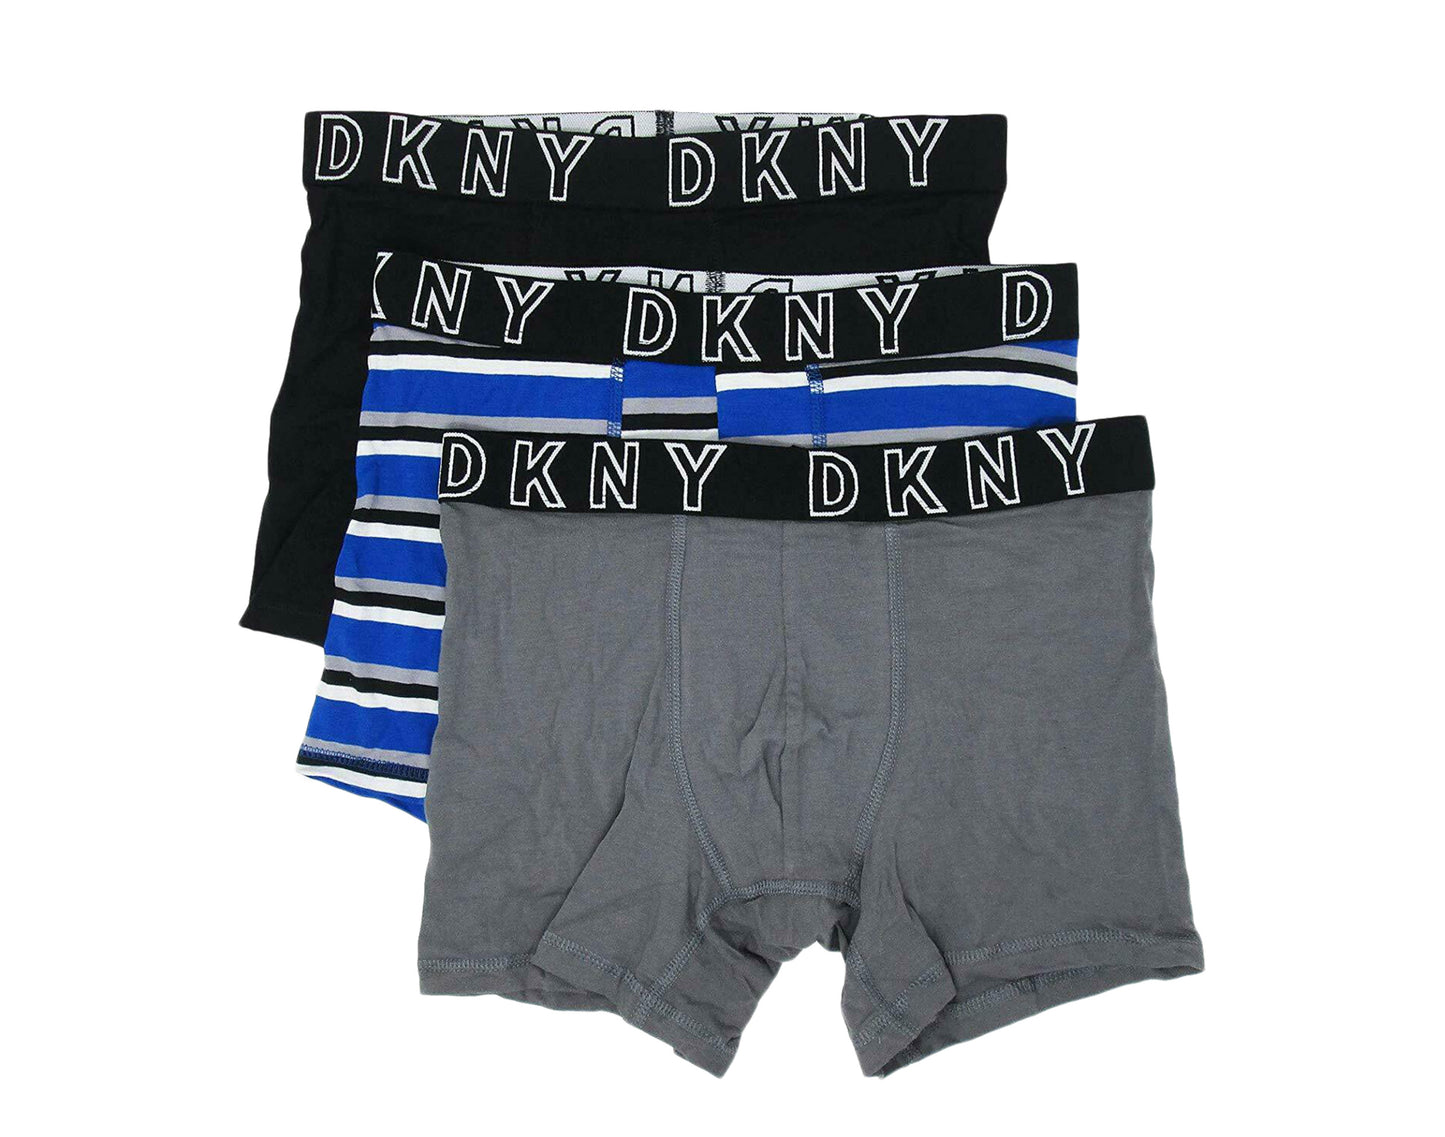 DKNY Classic Cotton Stretch Boxer Briefs Men's Underwear - 3-Pack